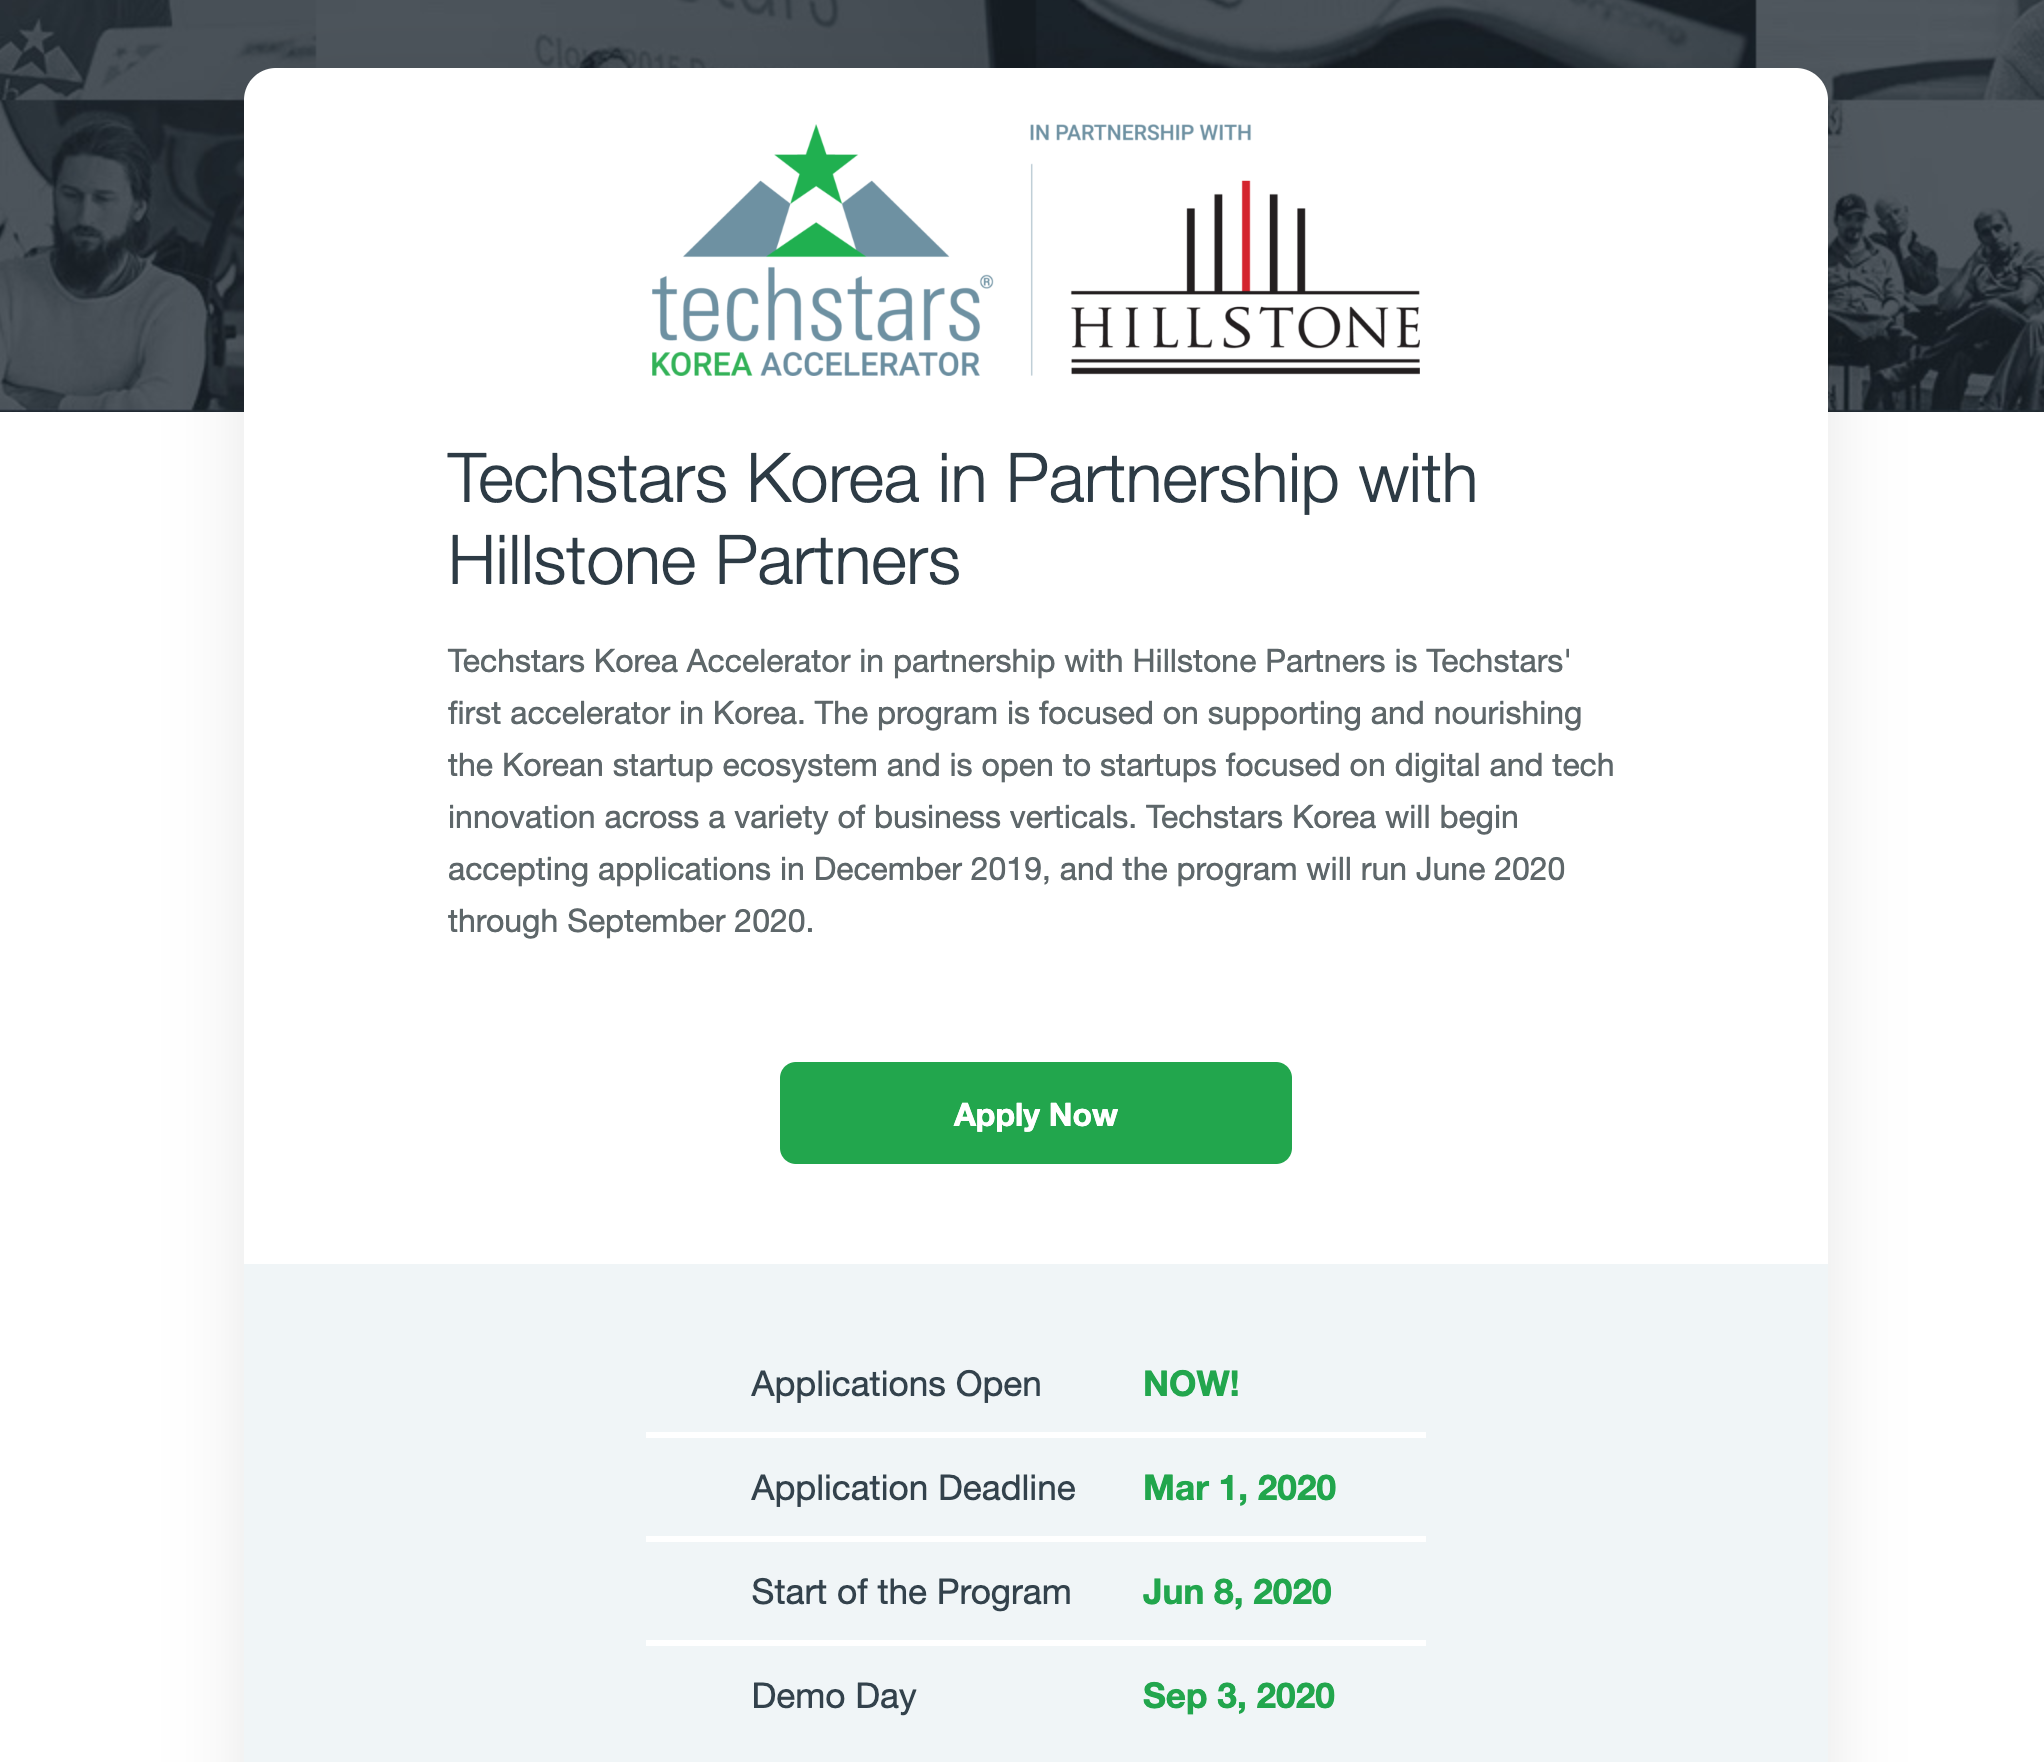 Techstars Korea in Partnership with Hilstone Partners